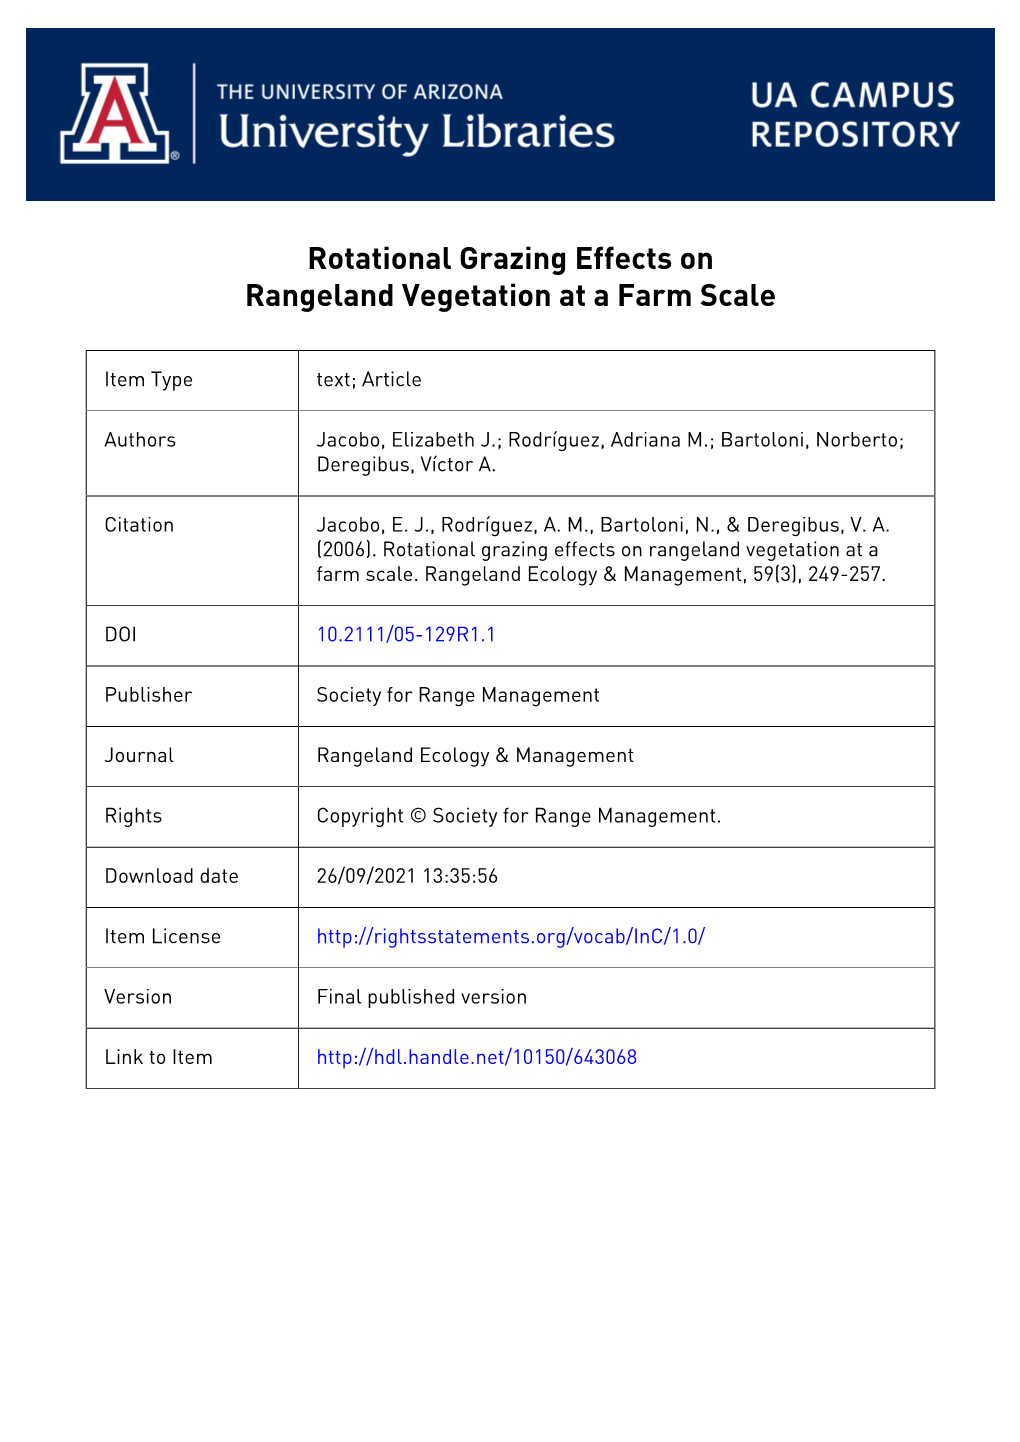 Rotational Grazing Effects on Rangeland Vegetation at a Farm Scale